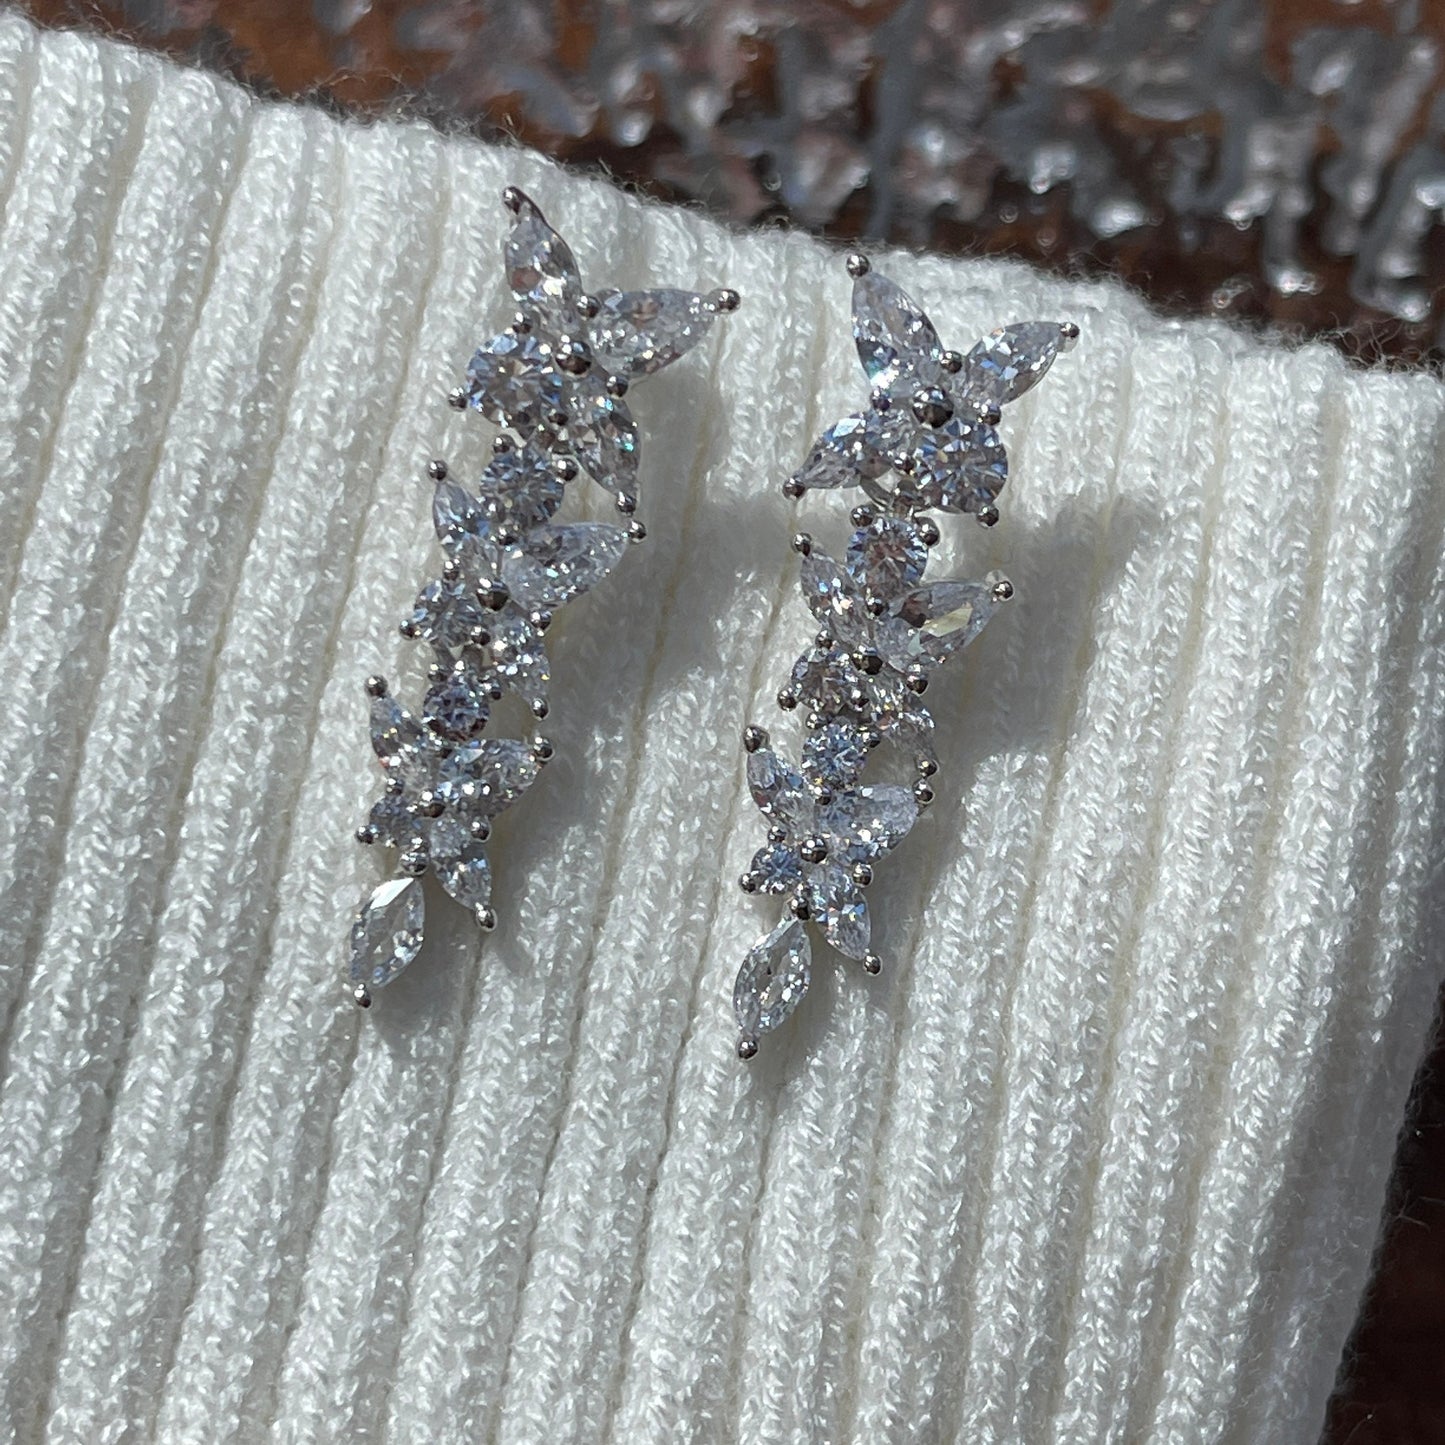 Floral bridal earrings, romantic earrings, celestial silver earrings, diamond cz earrings, crystal bridal bridesmaid earrings, chandelier